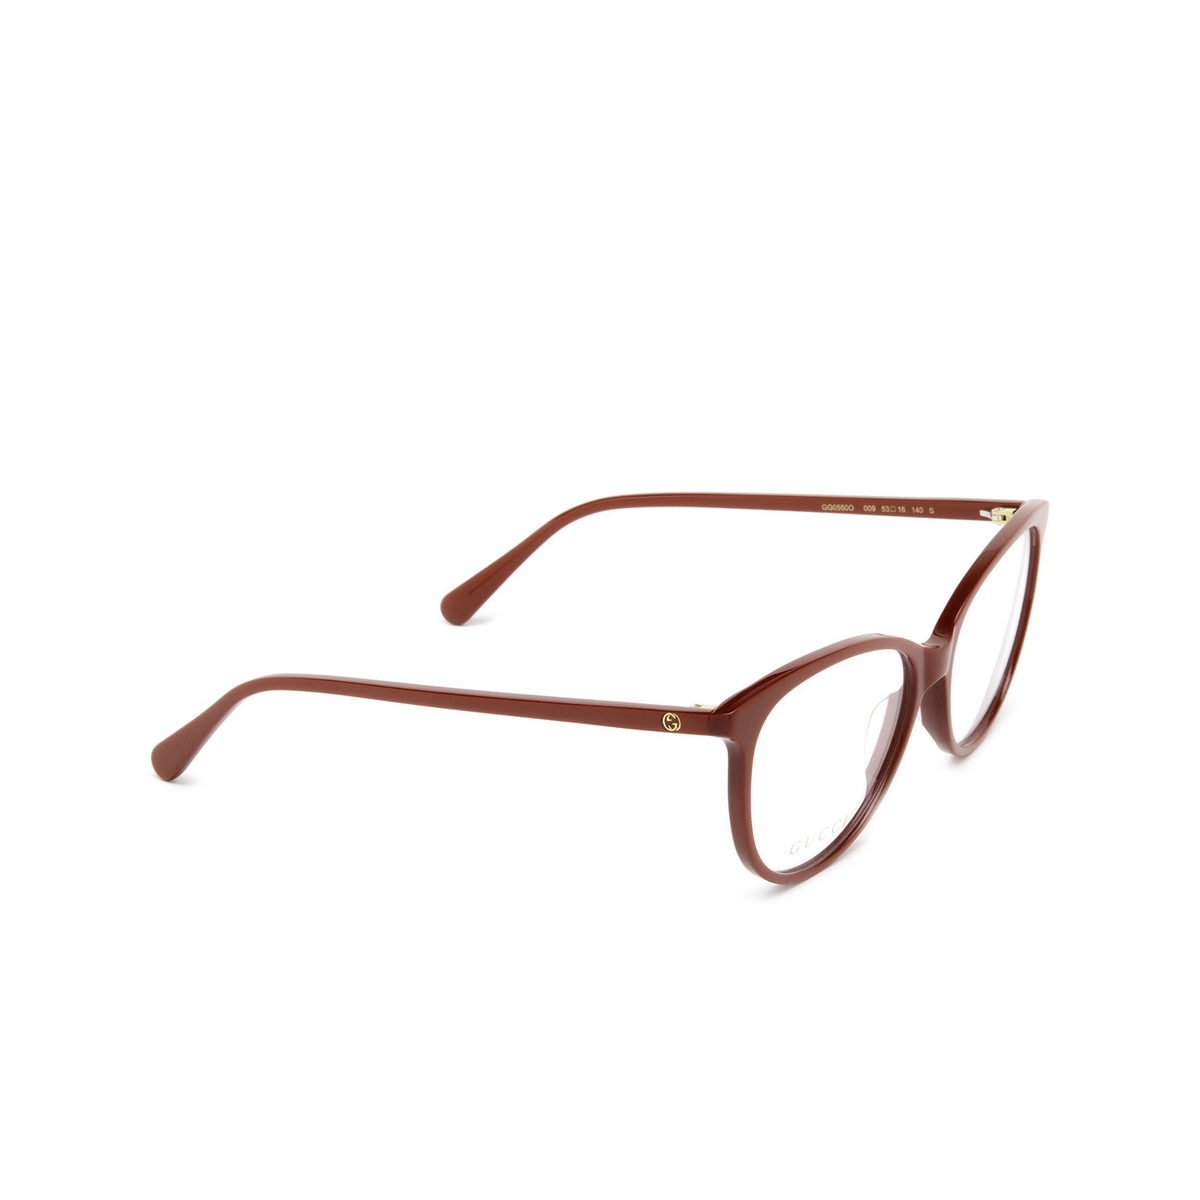 Gucci® Cat-eye Eyeglasses: GG0550O color Red 009 - three-quarters view.